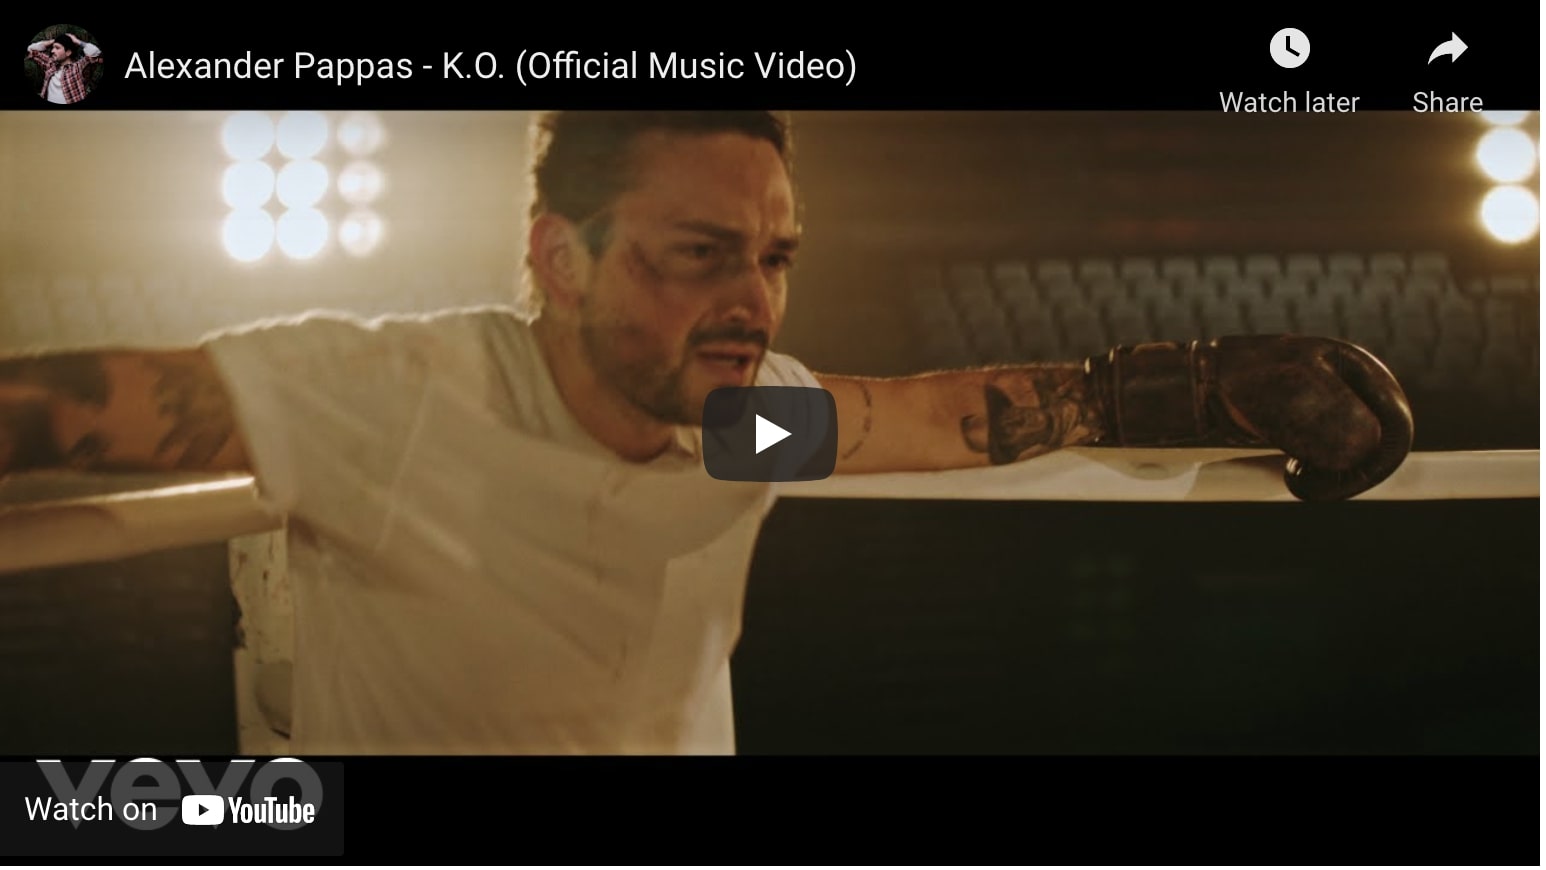 alexander pappas K.O. official music video